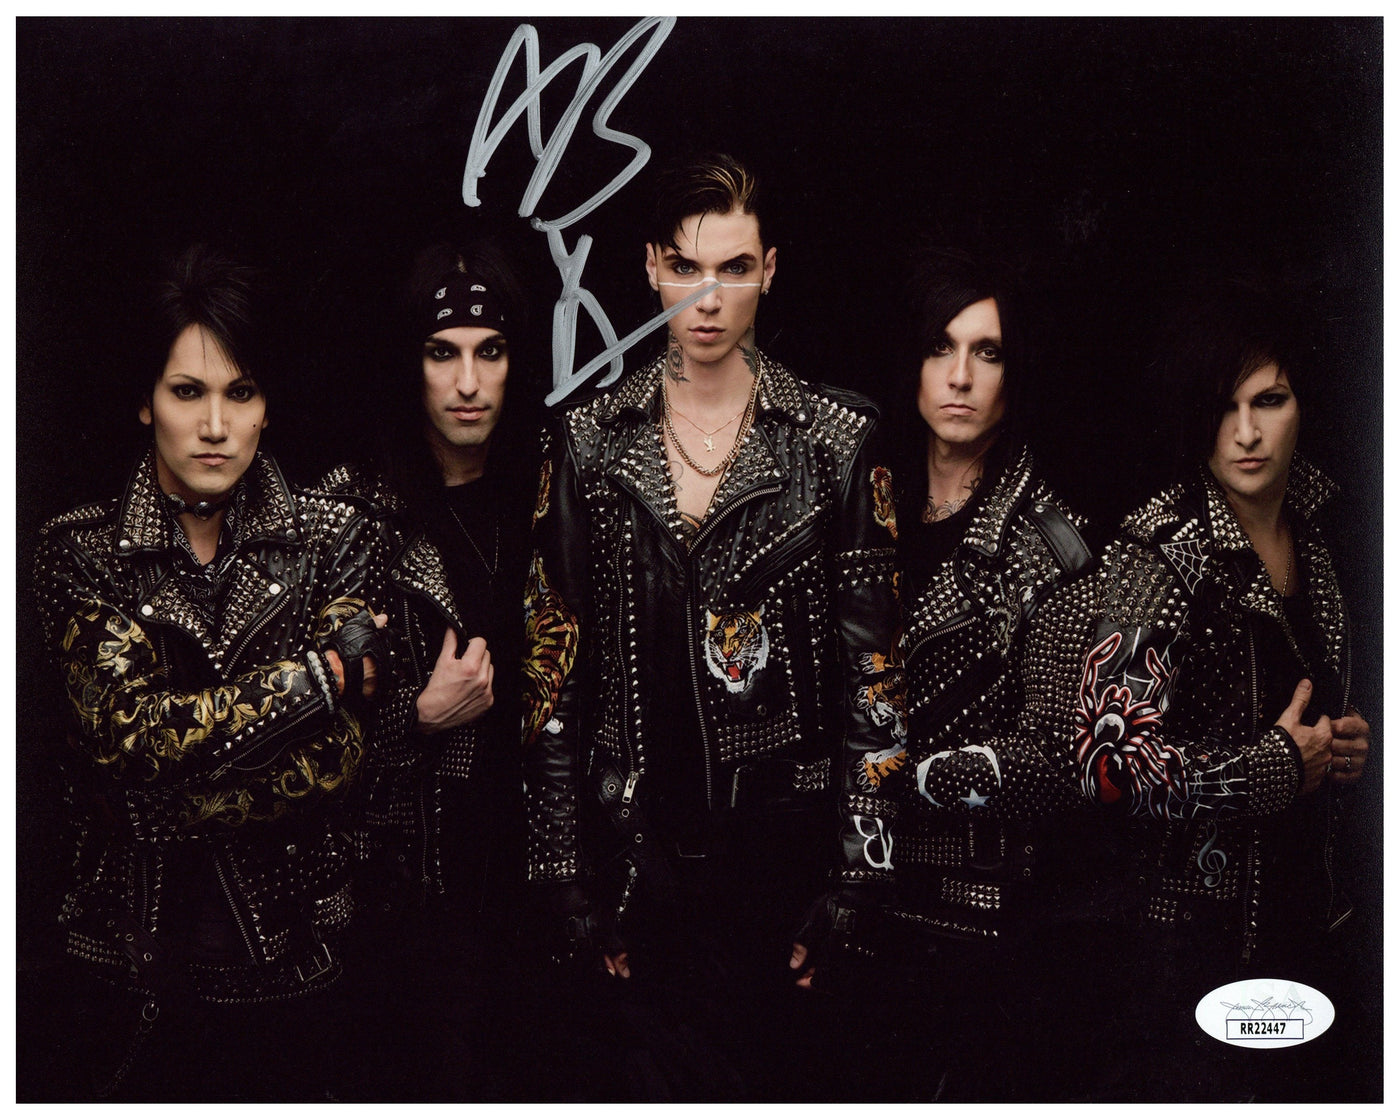 Andy Black Autographed 8x10 Photo Black Veil Brides Metal Signed JSA COA #5